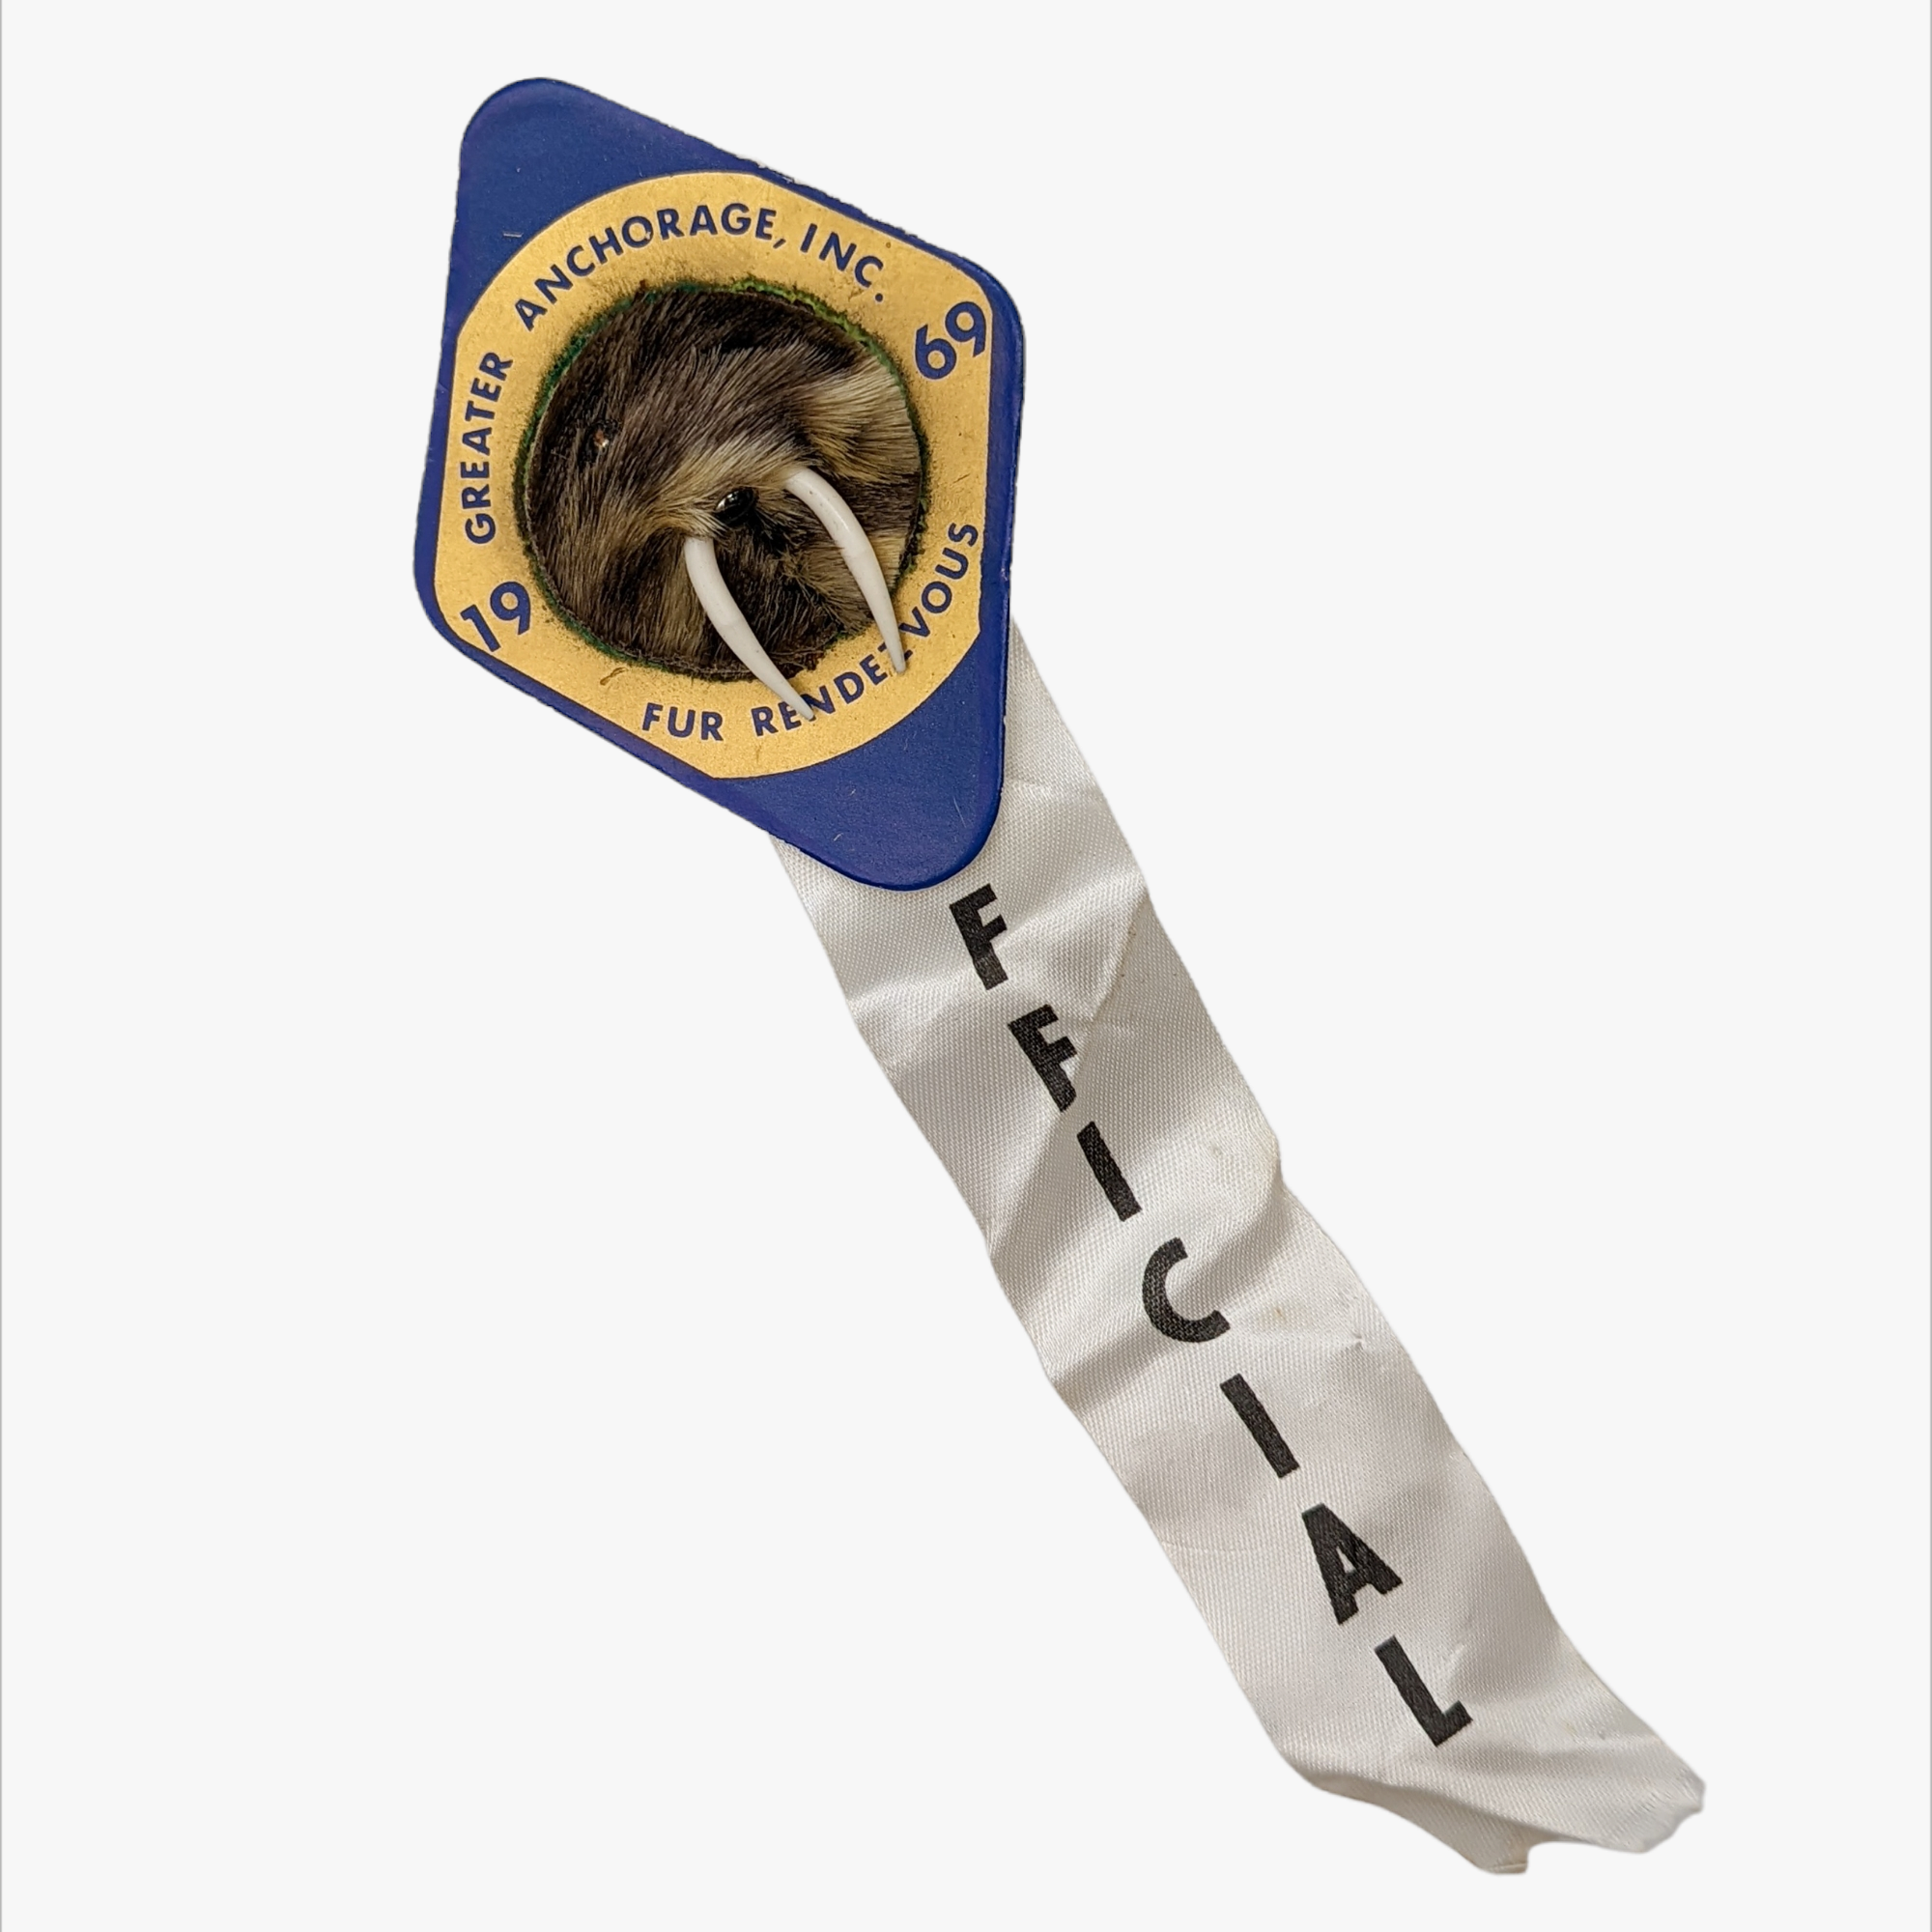 Vintage 1969 Alaska Fur Rendezvous Walrus Pin Official Badge